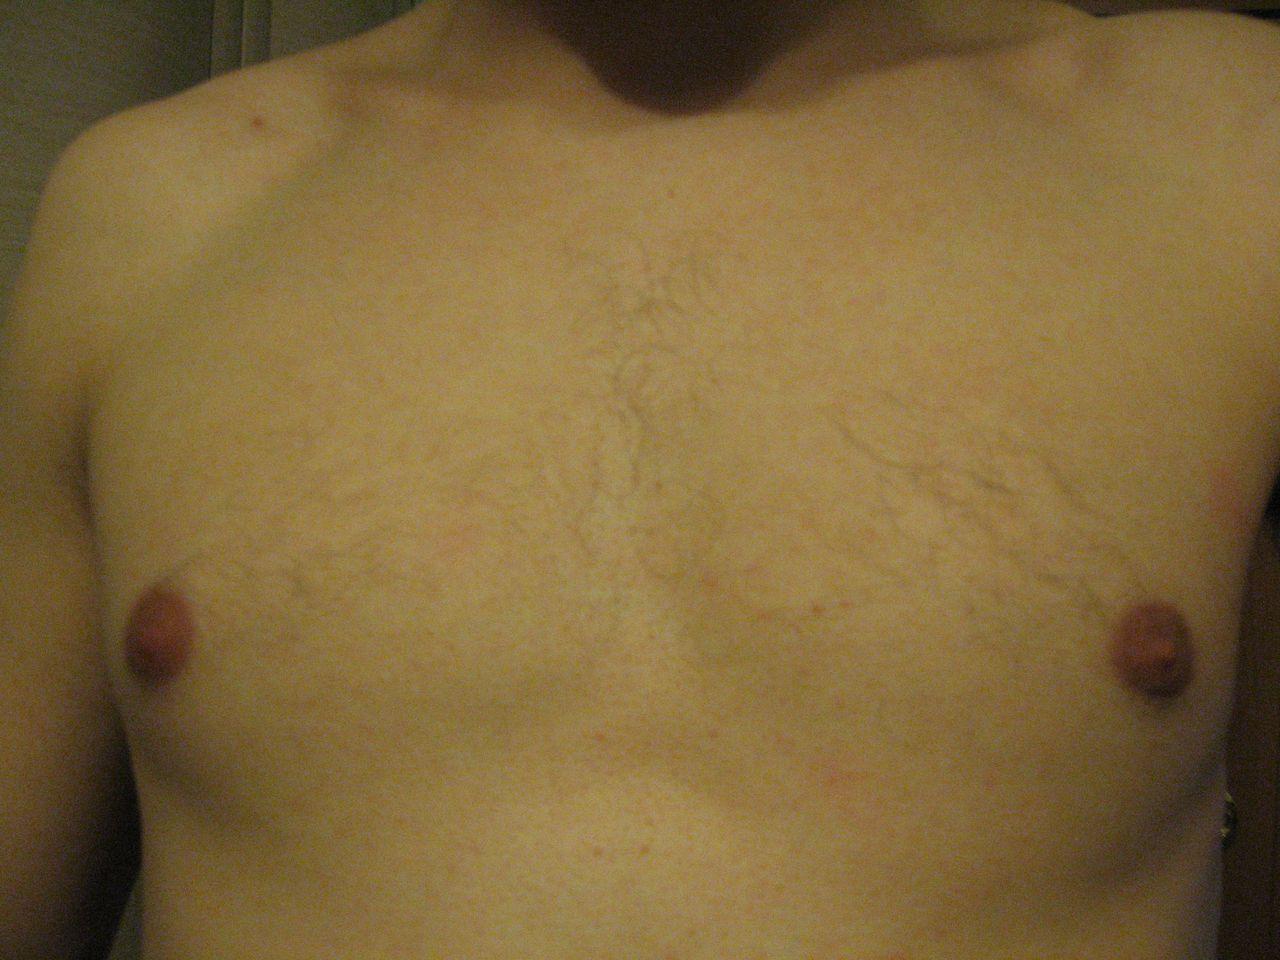 красное уплотнение на груди у мужчин фото 44